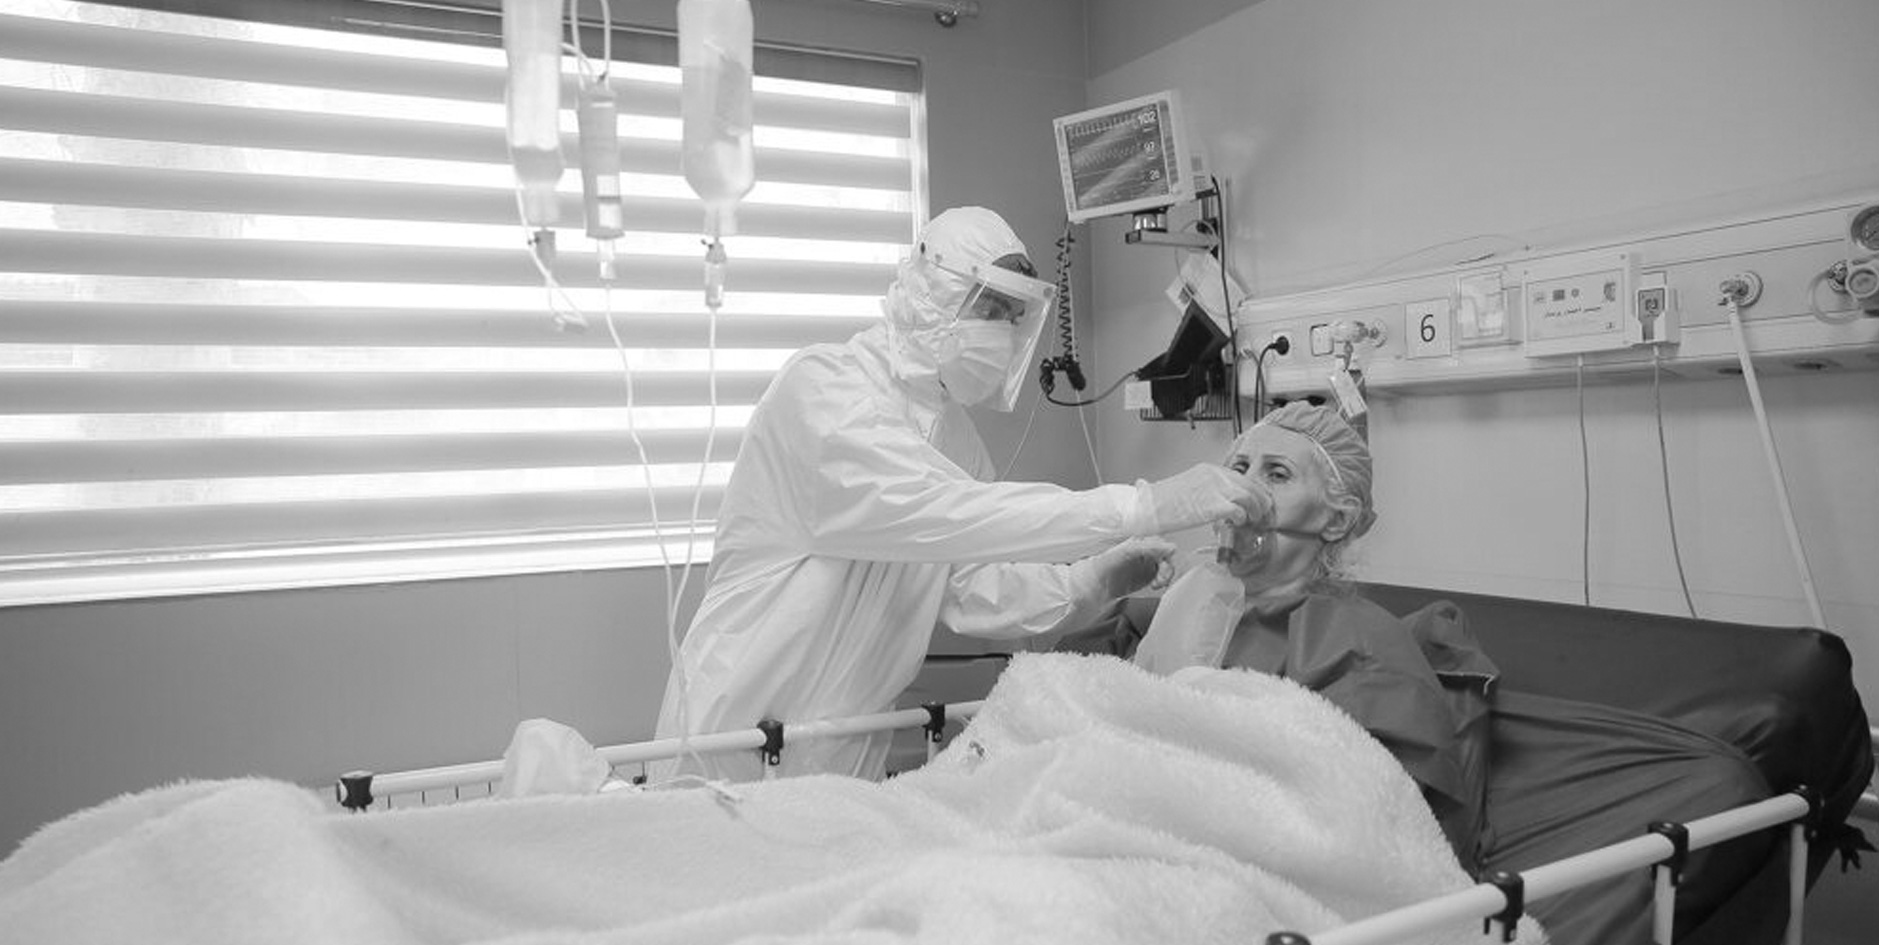 buddy haas add emfermera reviviendo a paciente photo